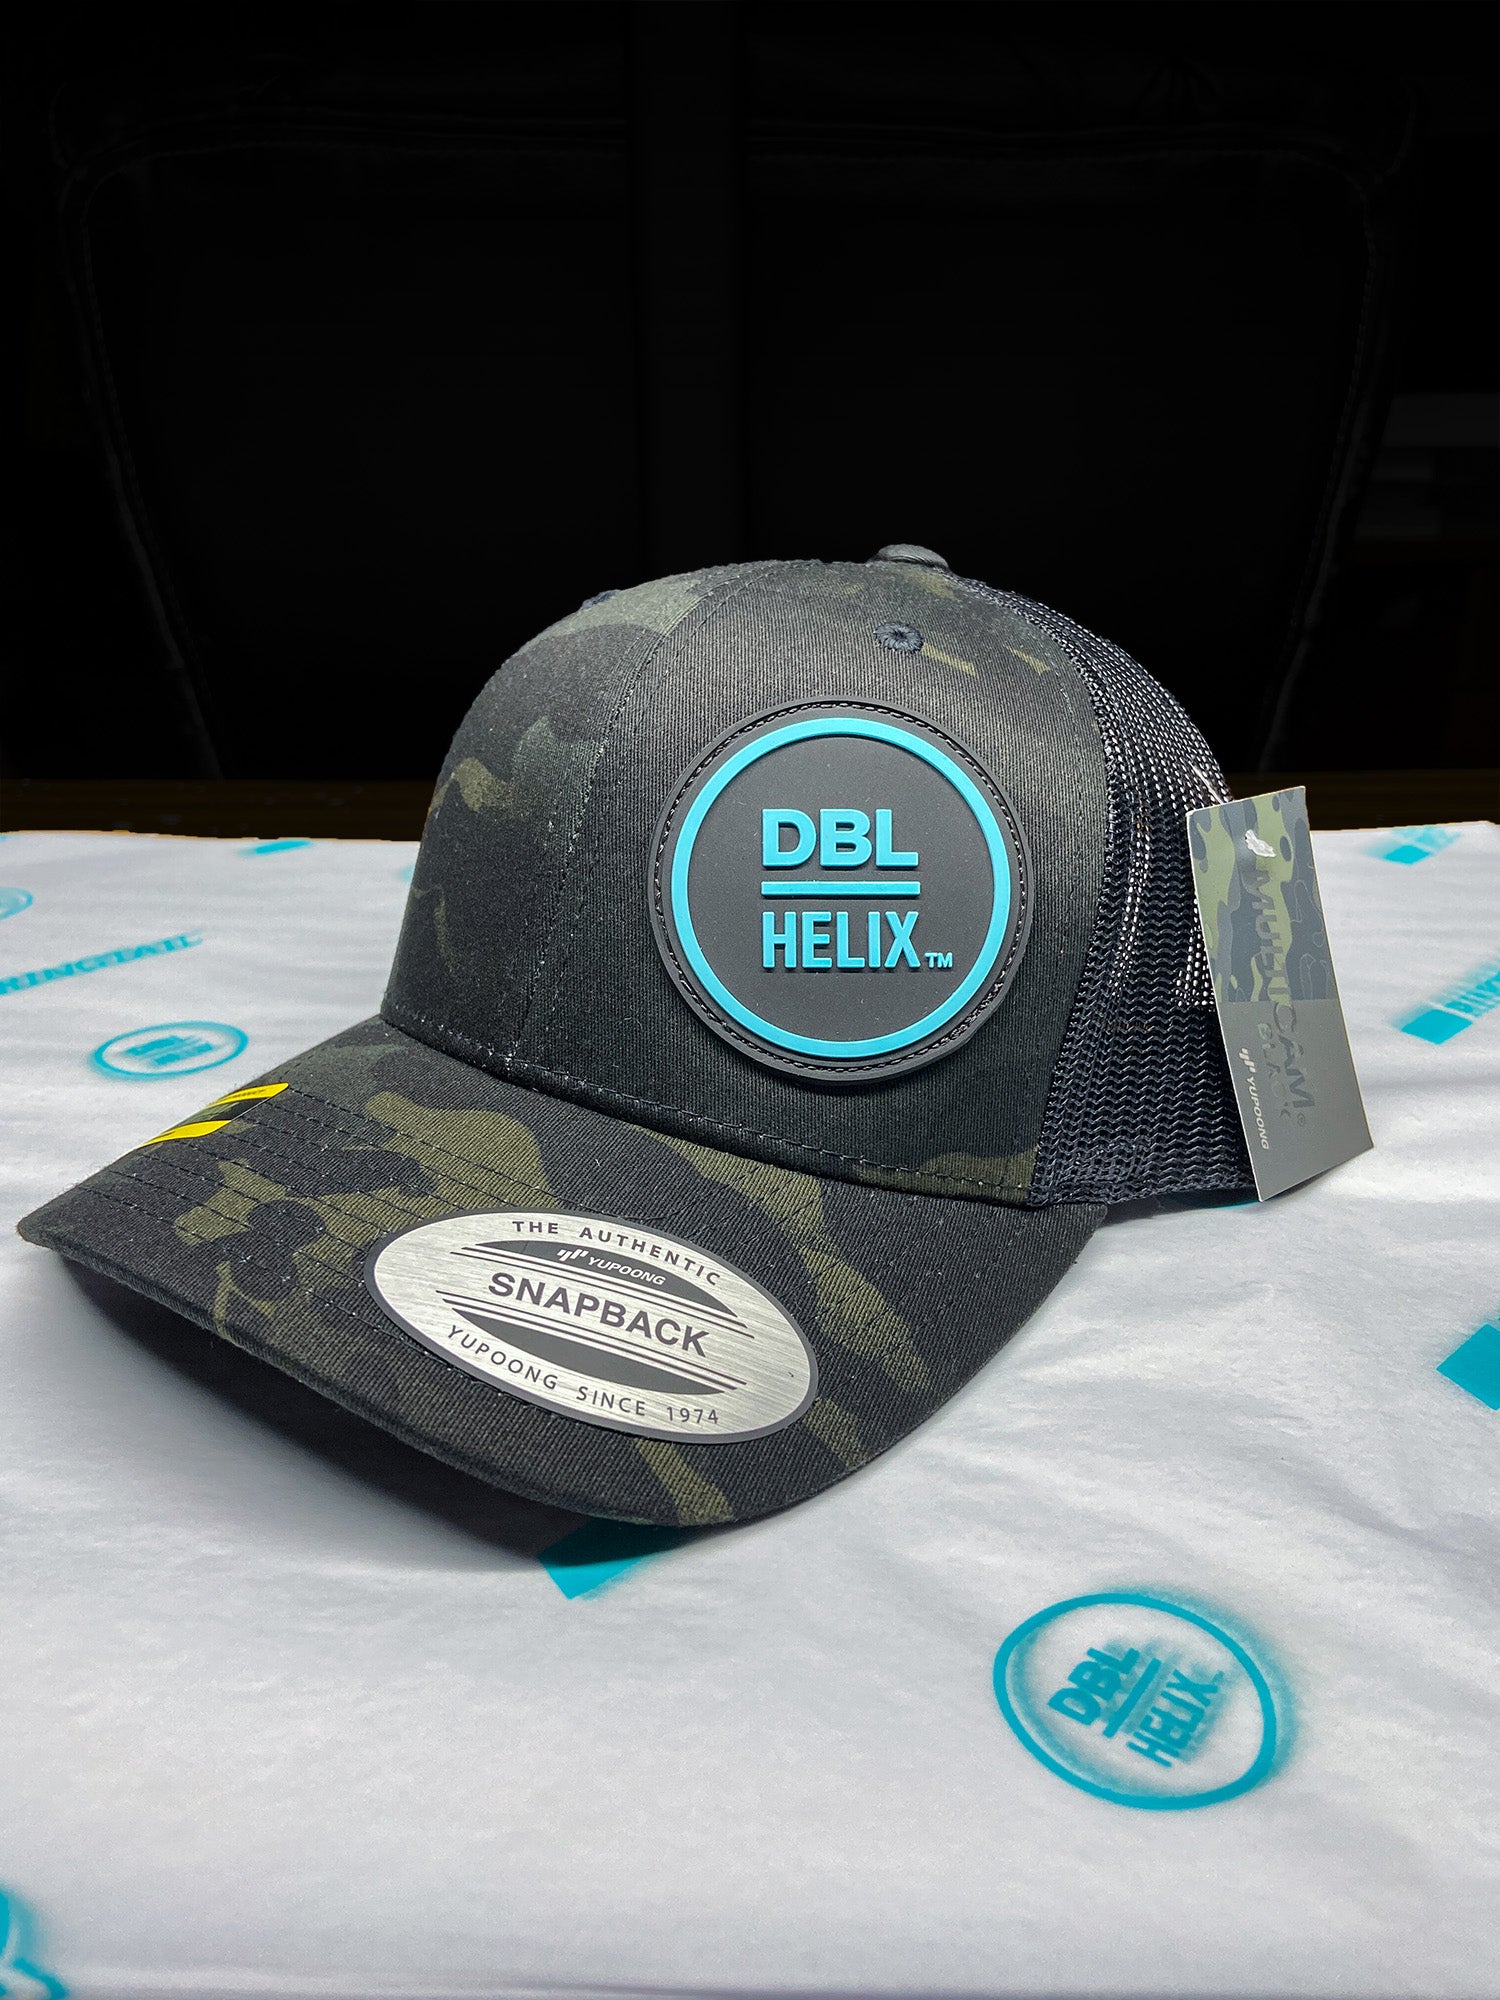 DBL Helix Rubber Patch Prowler Snapback Cap